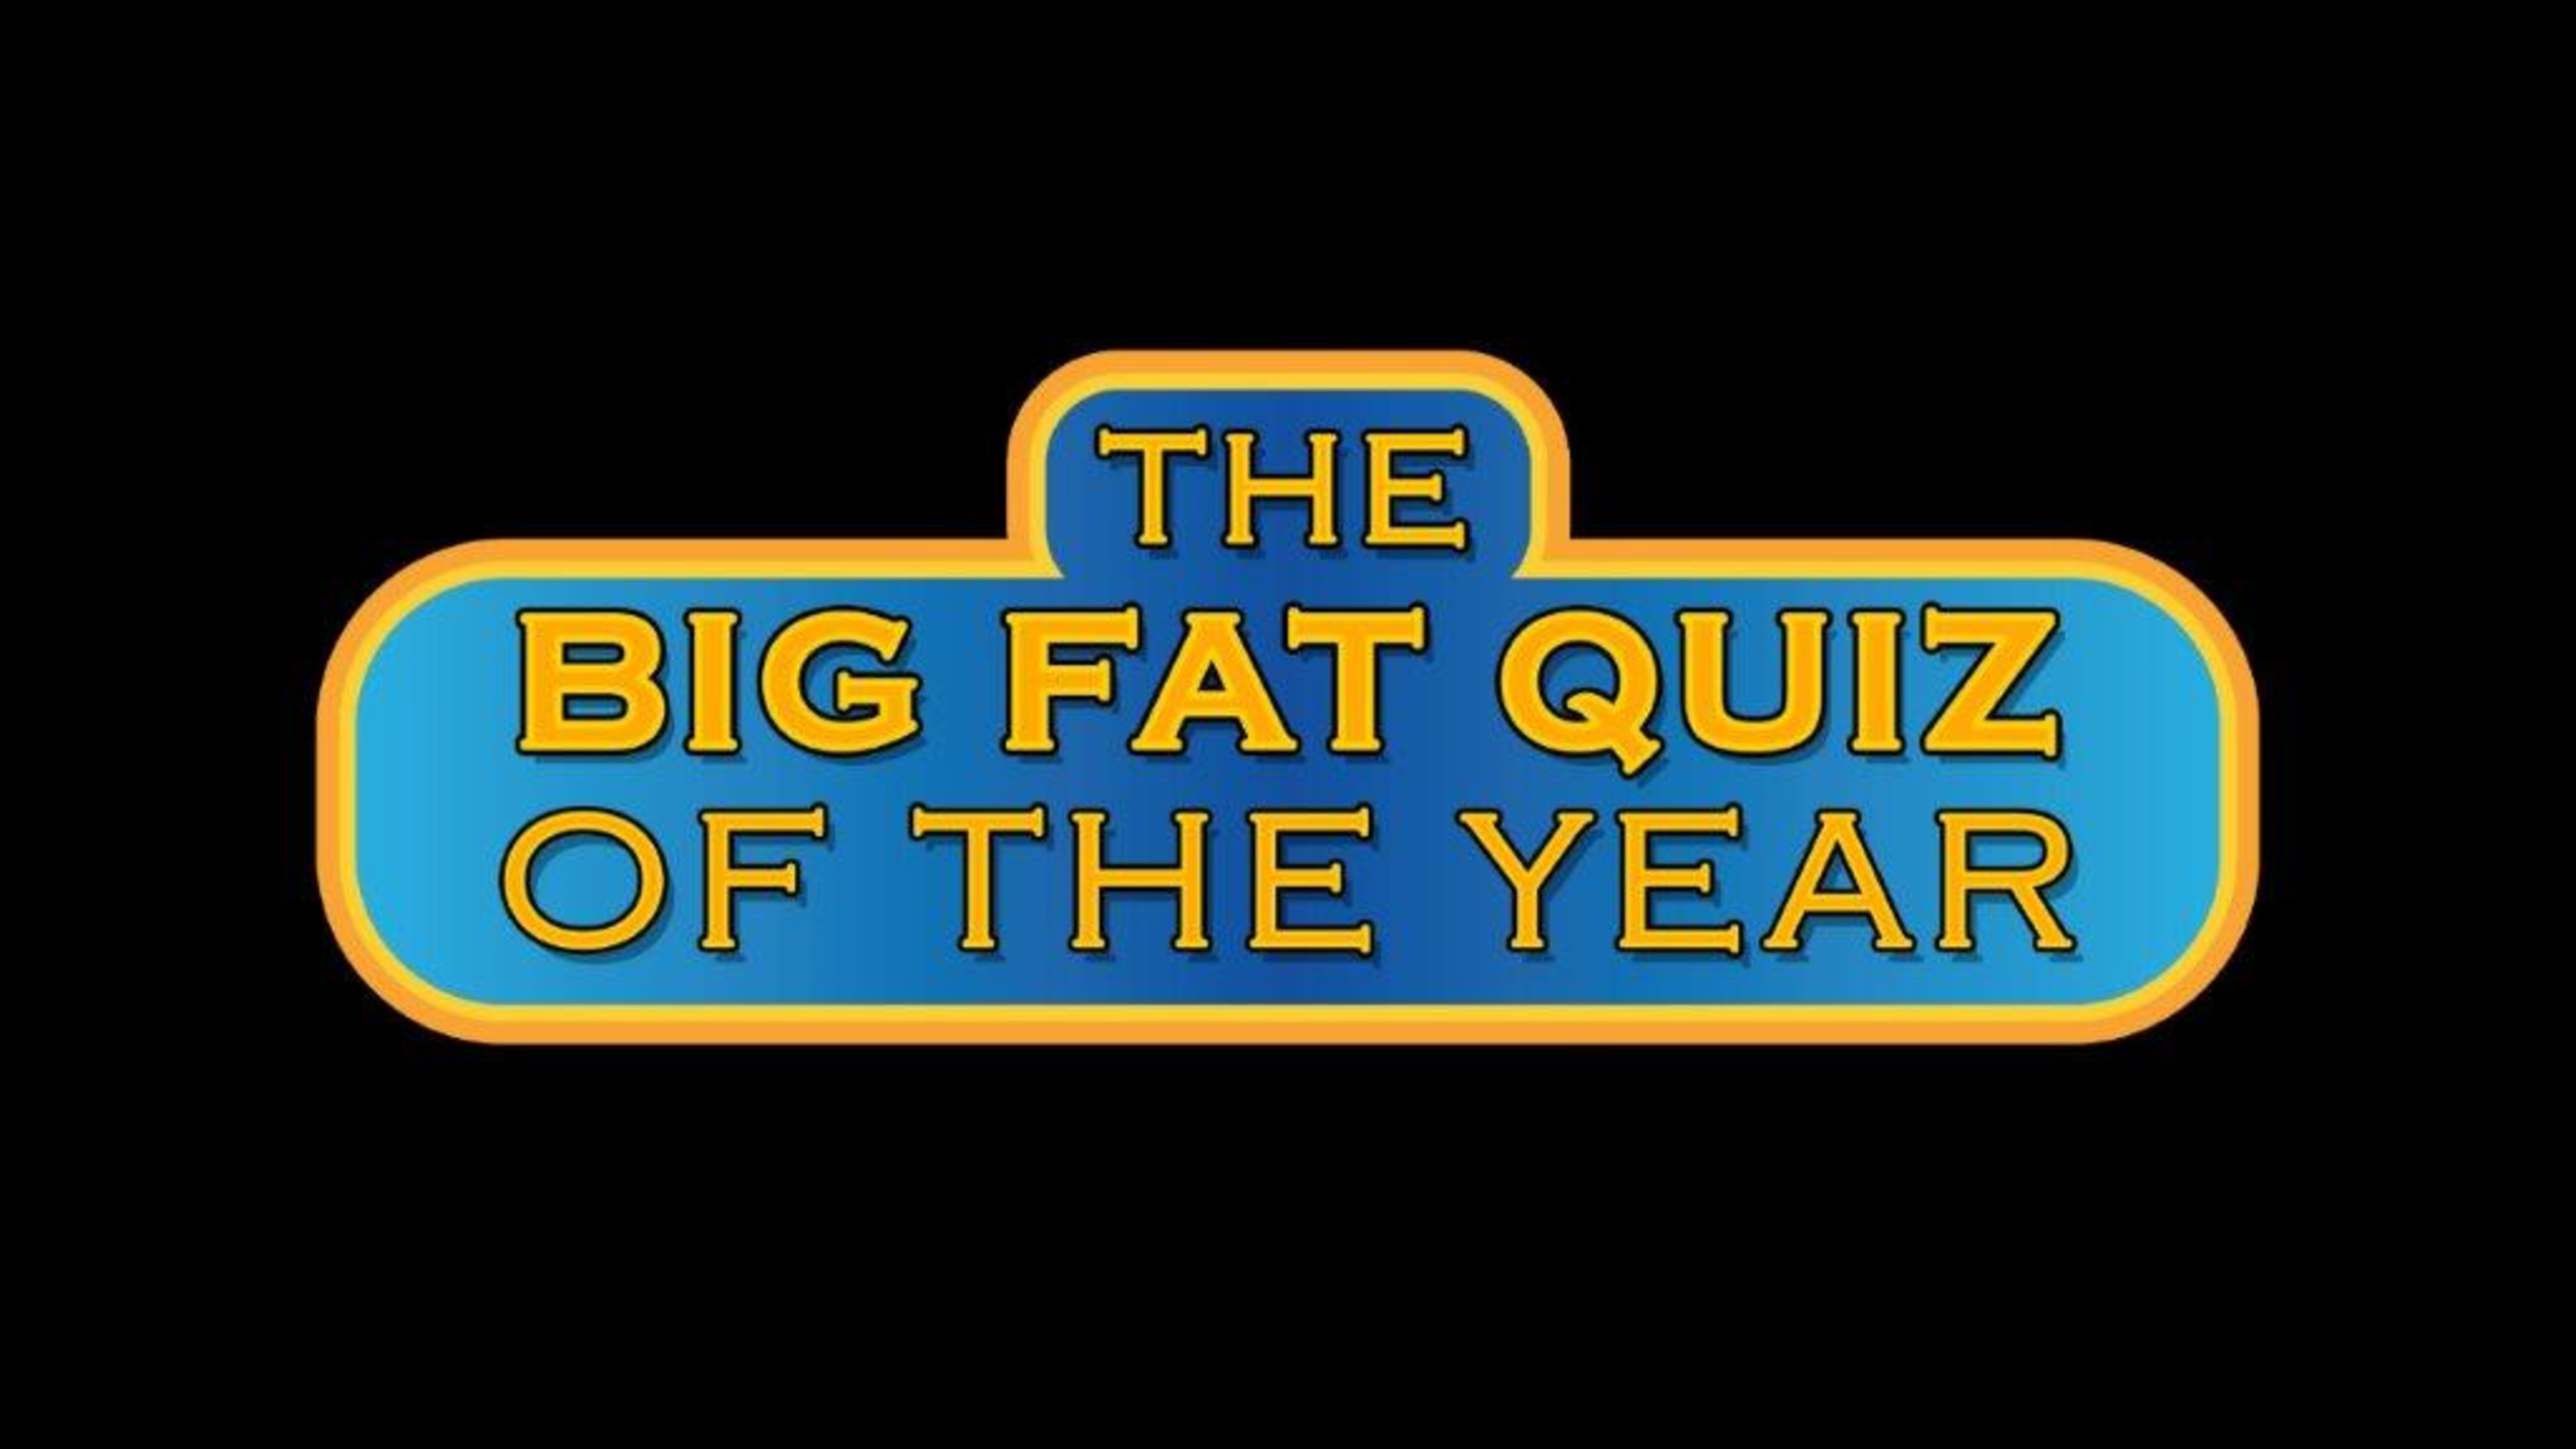 Big fat quiz of the year logo